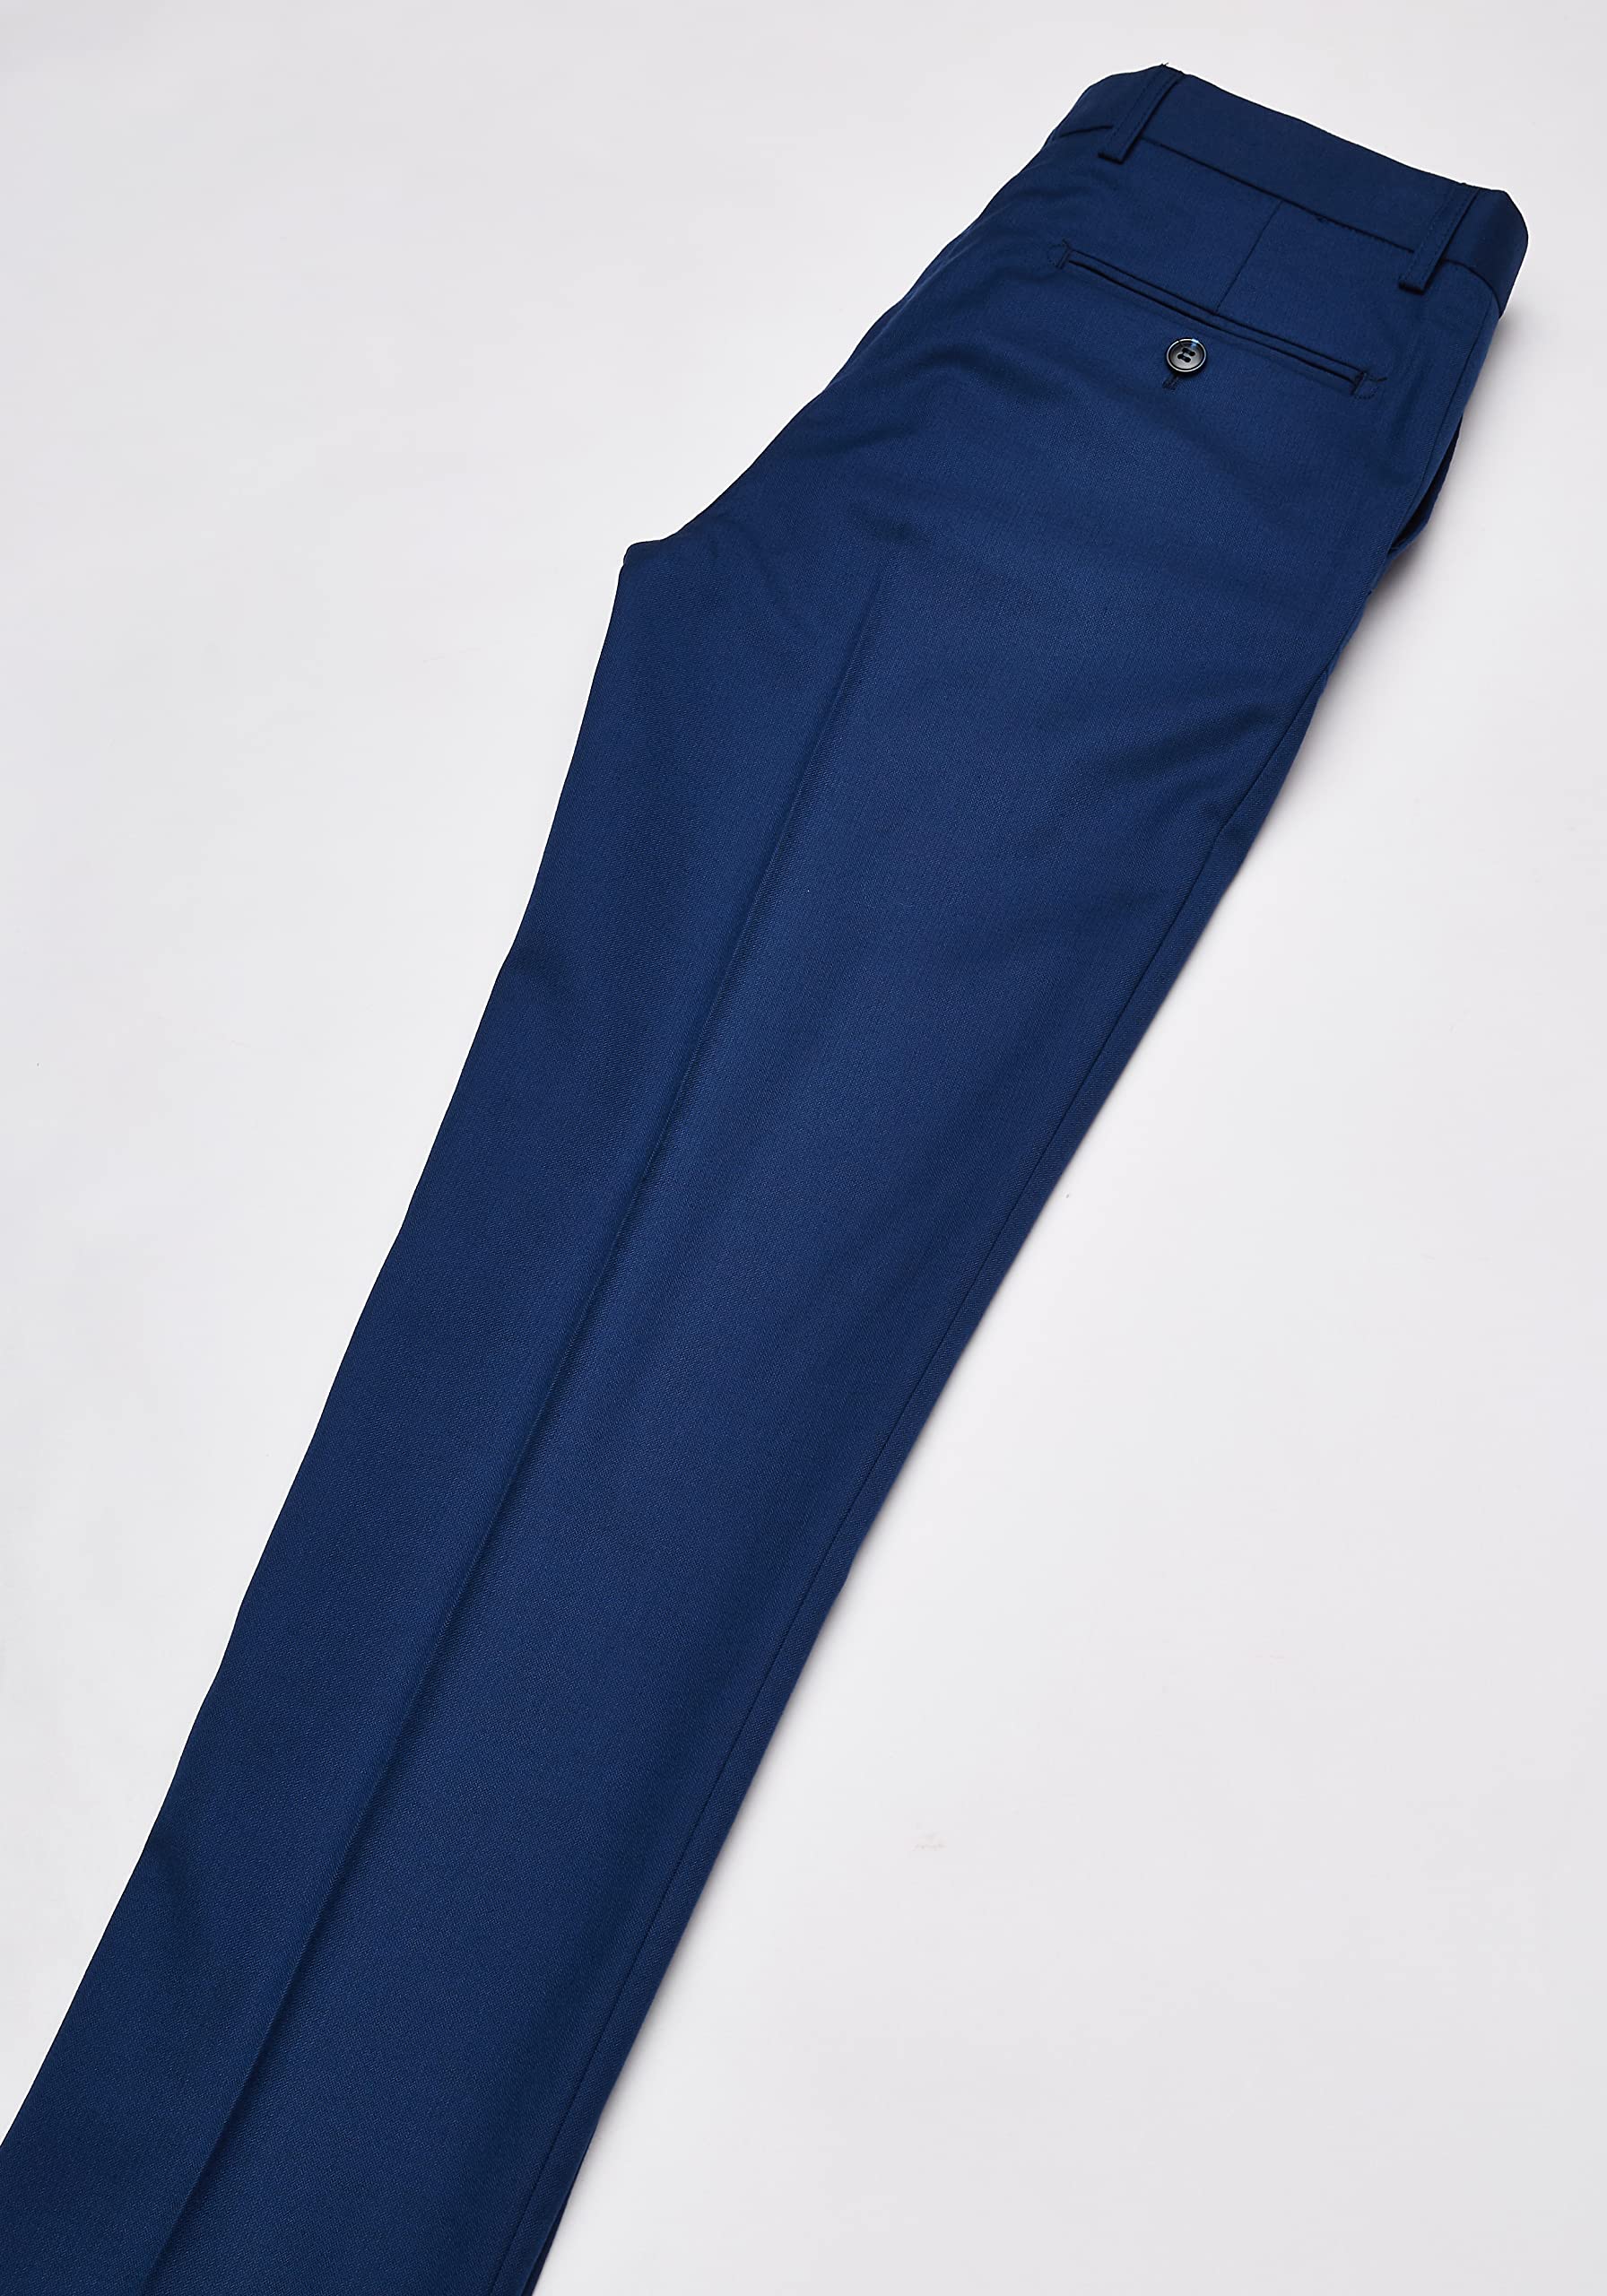 Isaac Mizrahi Boys' 2pc Slim Cut Wool Blend Suit